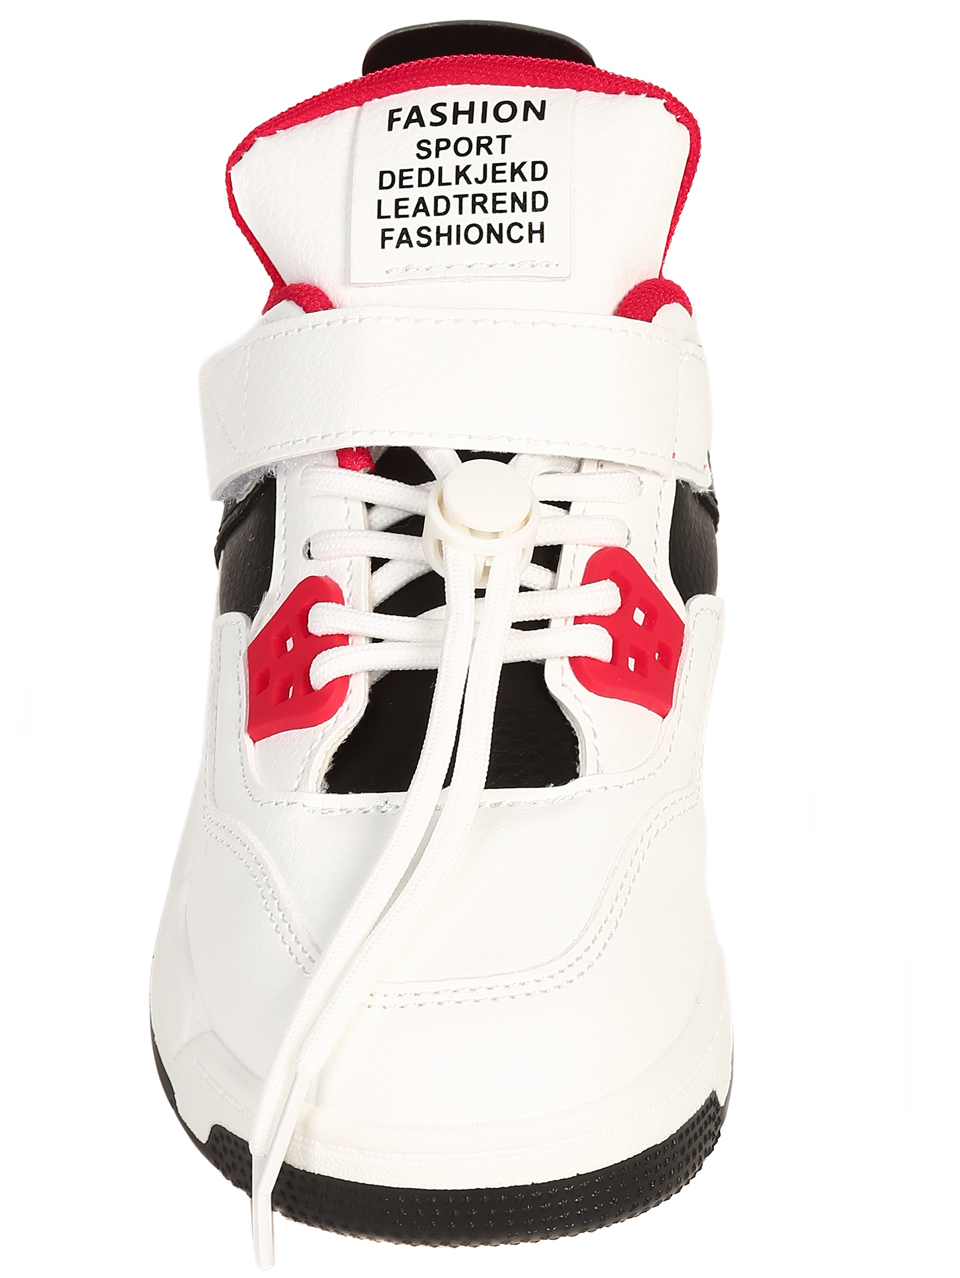 Ежедневни детски обувки в бяло и червено 18U-22681 white/red